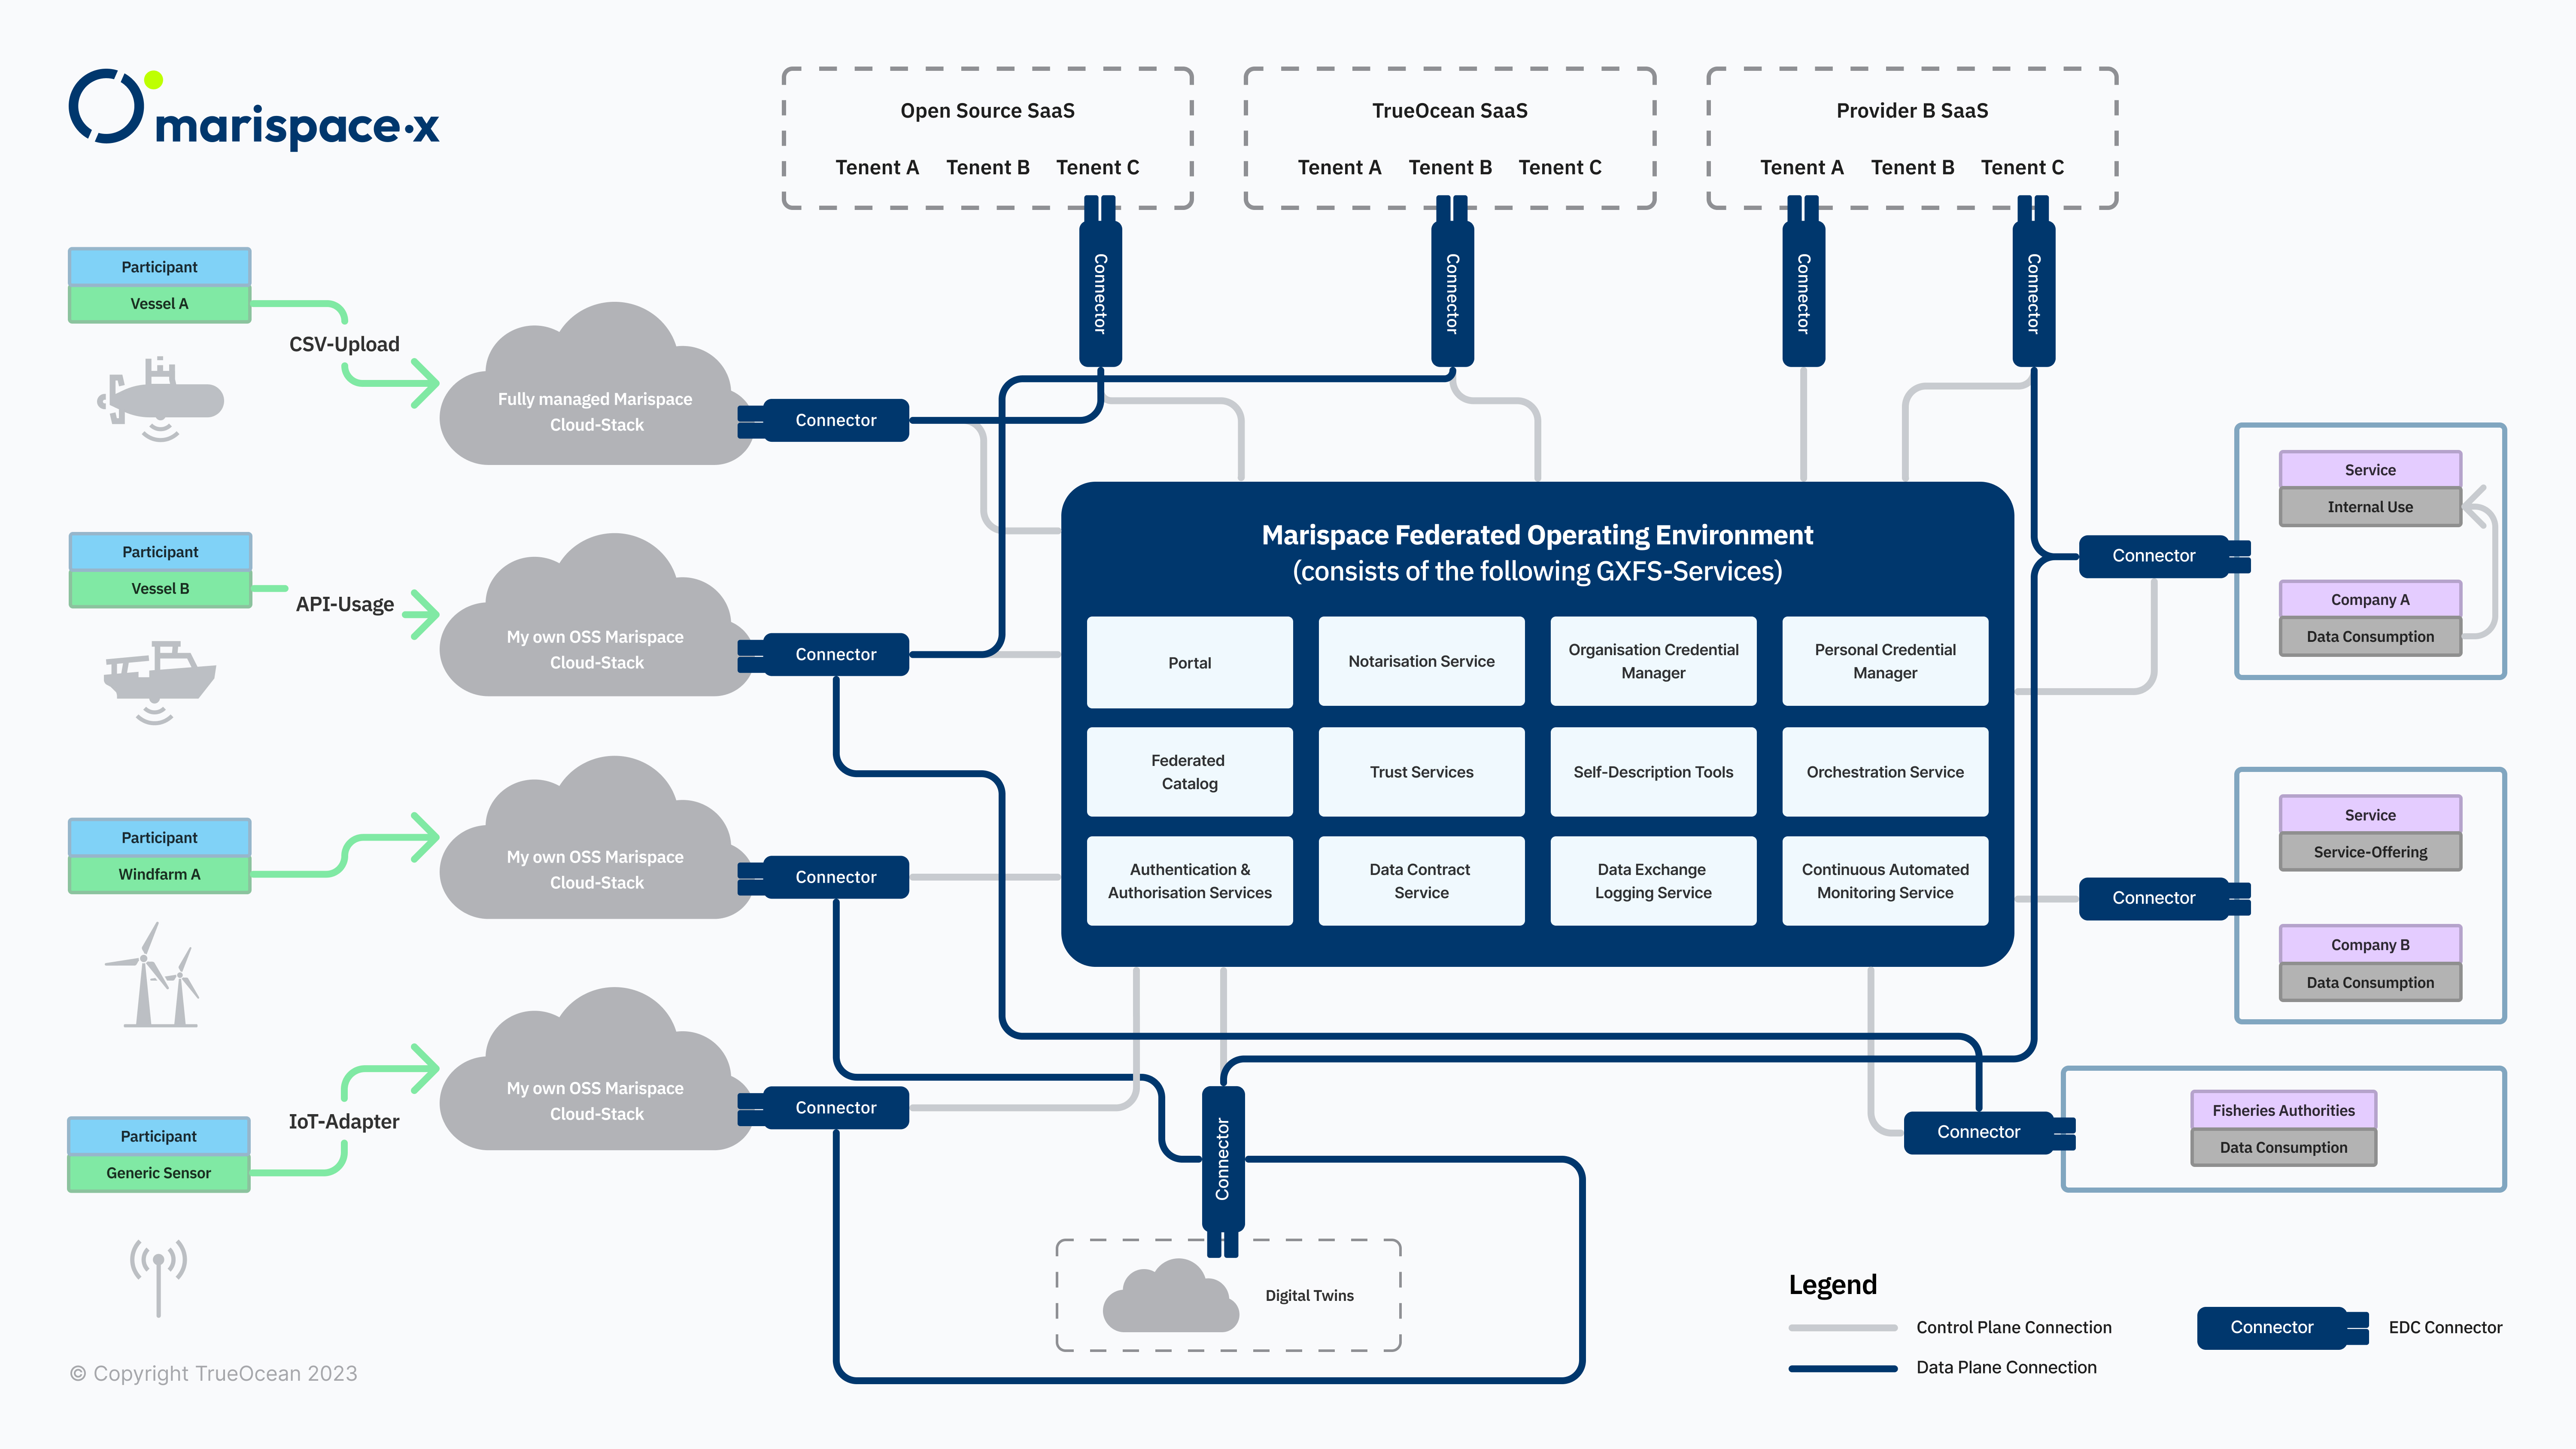 Struktur des Marispace-X Cloud Datenraums, Copyright north.io